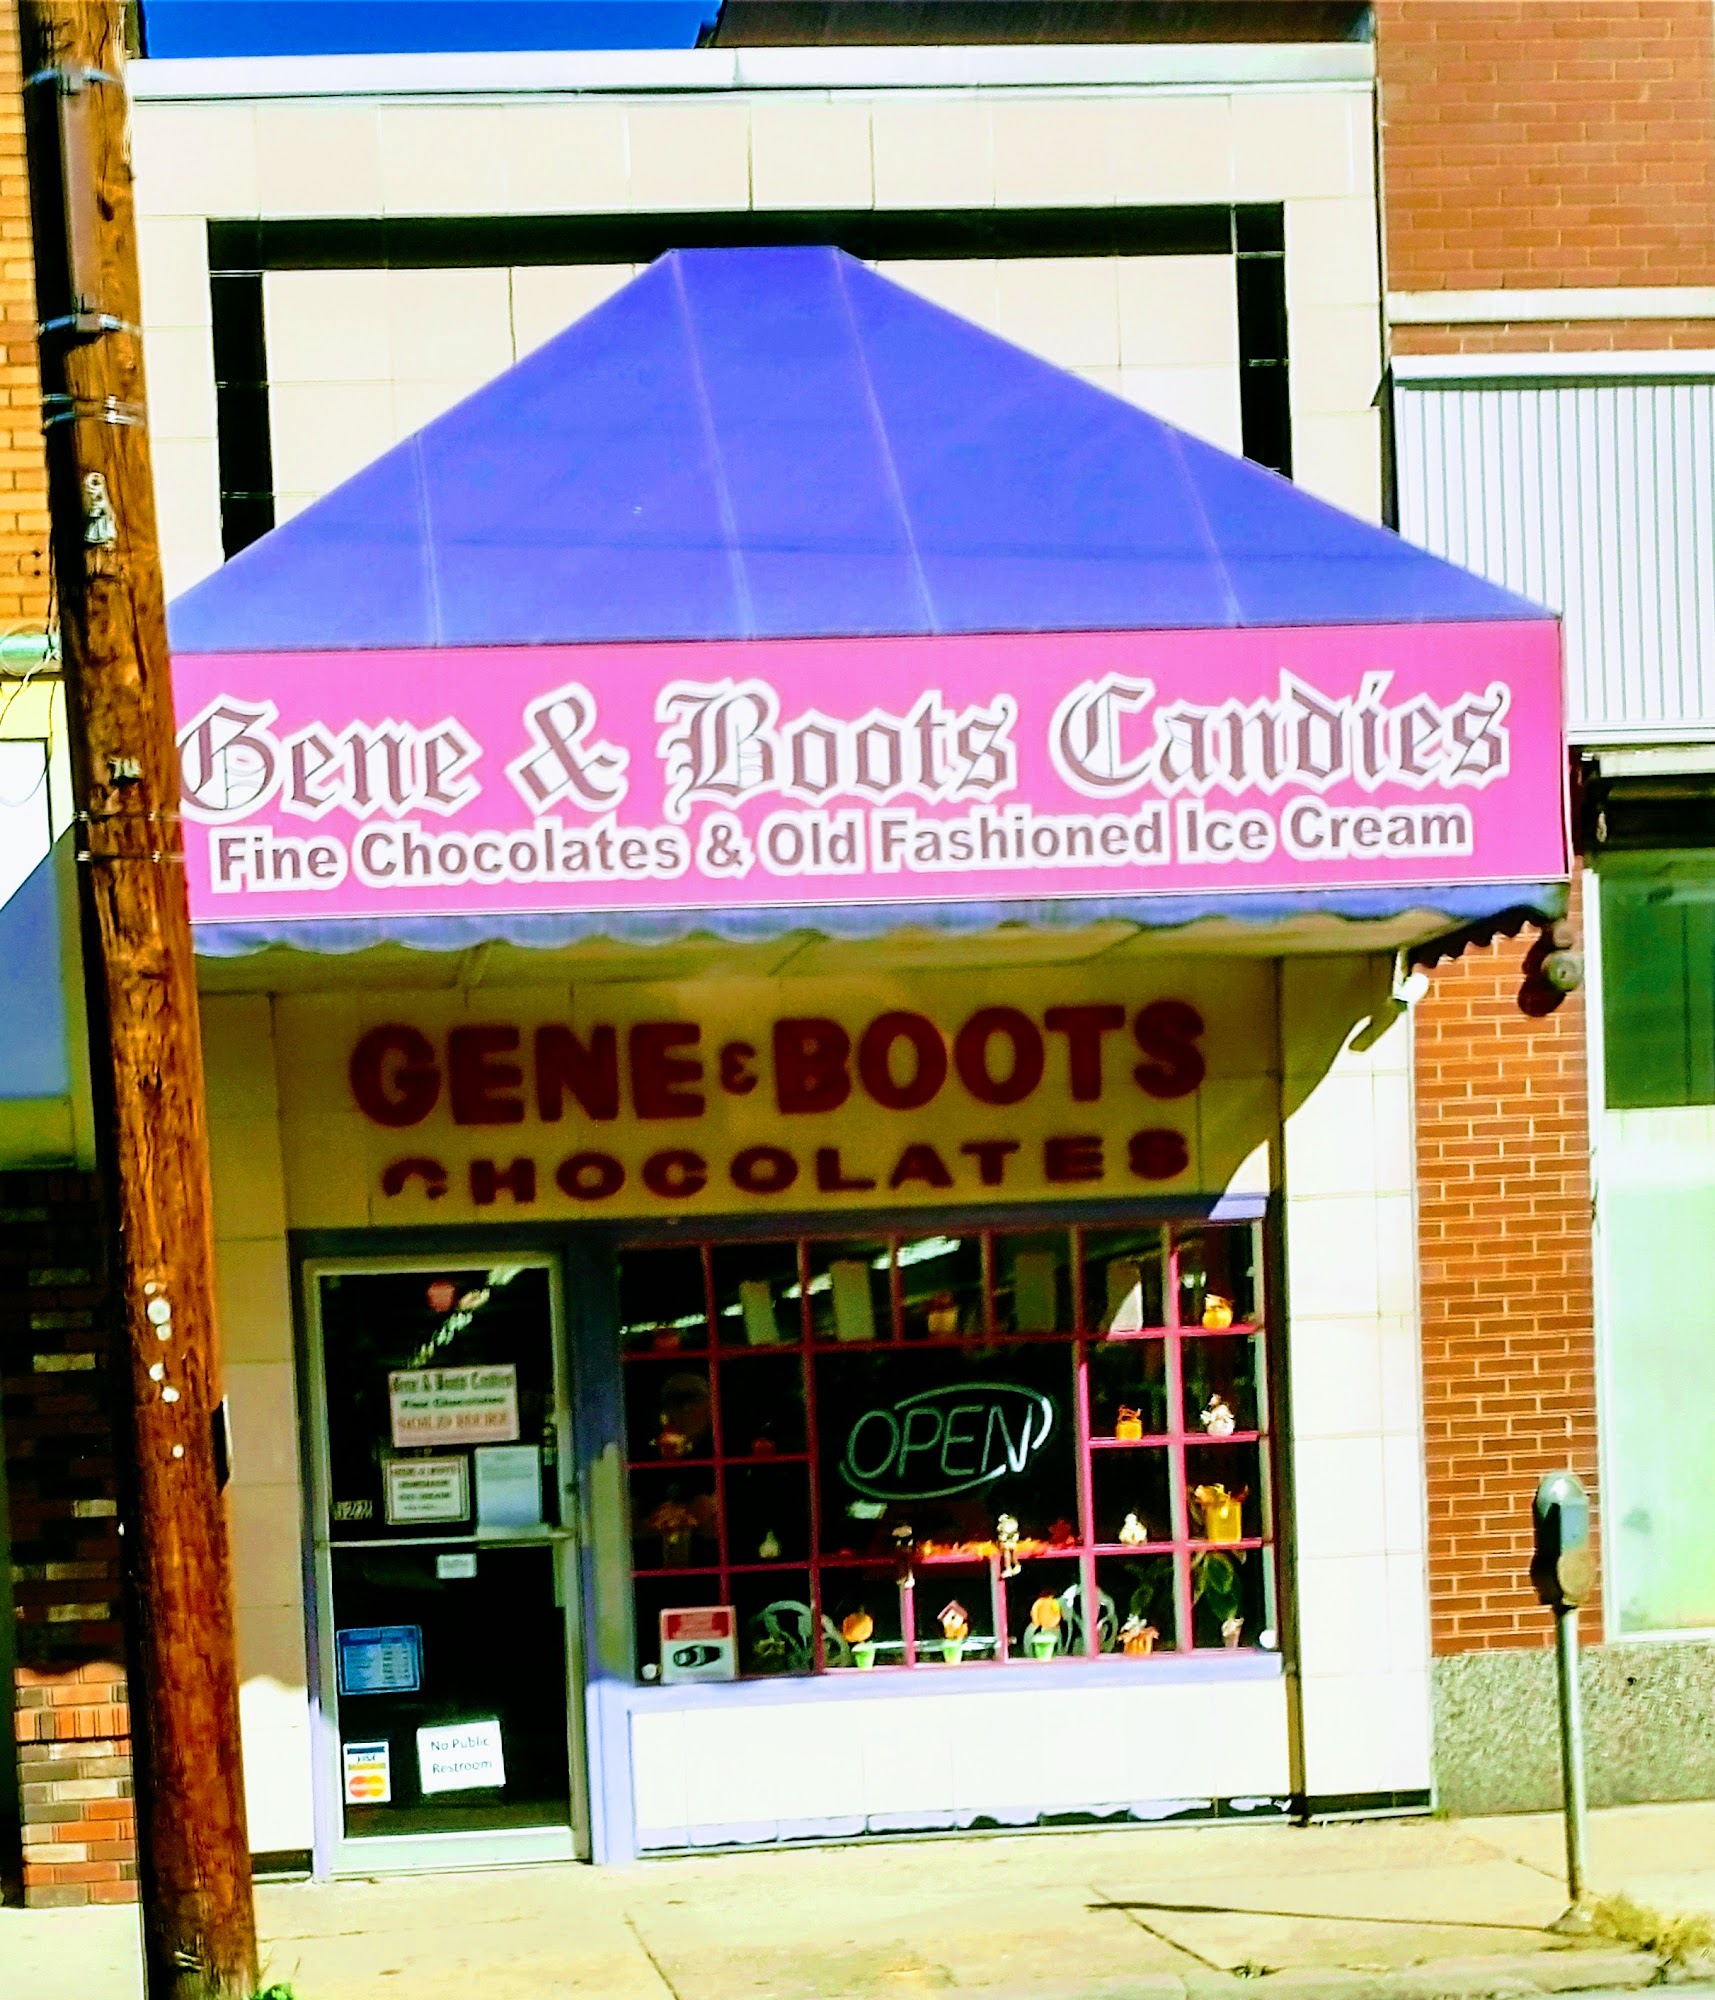 Gene & Boots Candies Inc